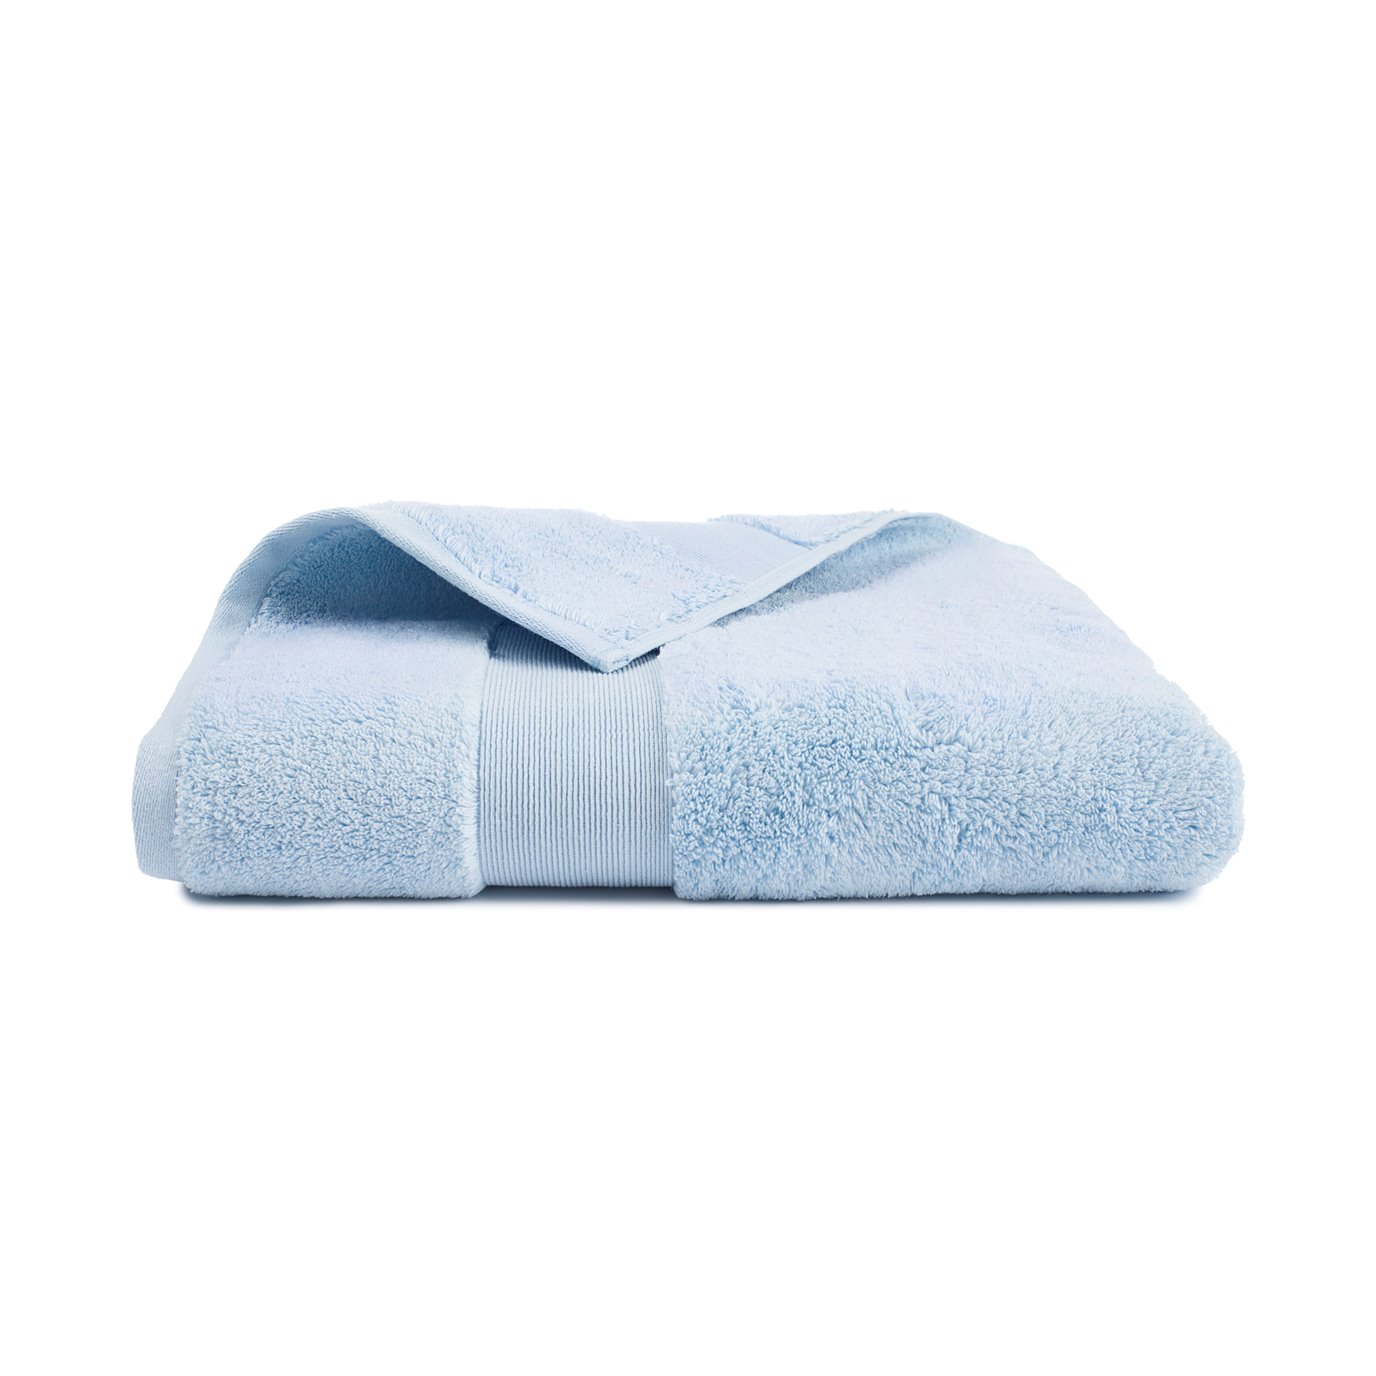 Martex Love Solid White 6 Piece Bath Towel Set by WestPoint Home